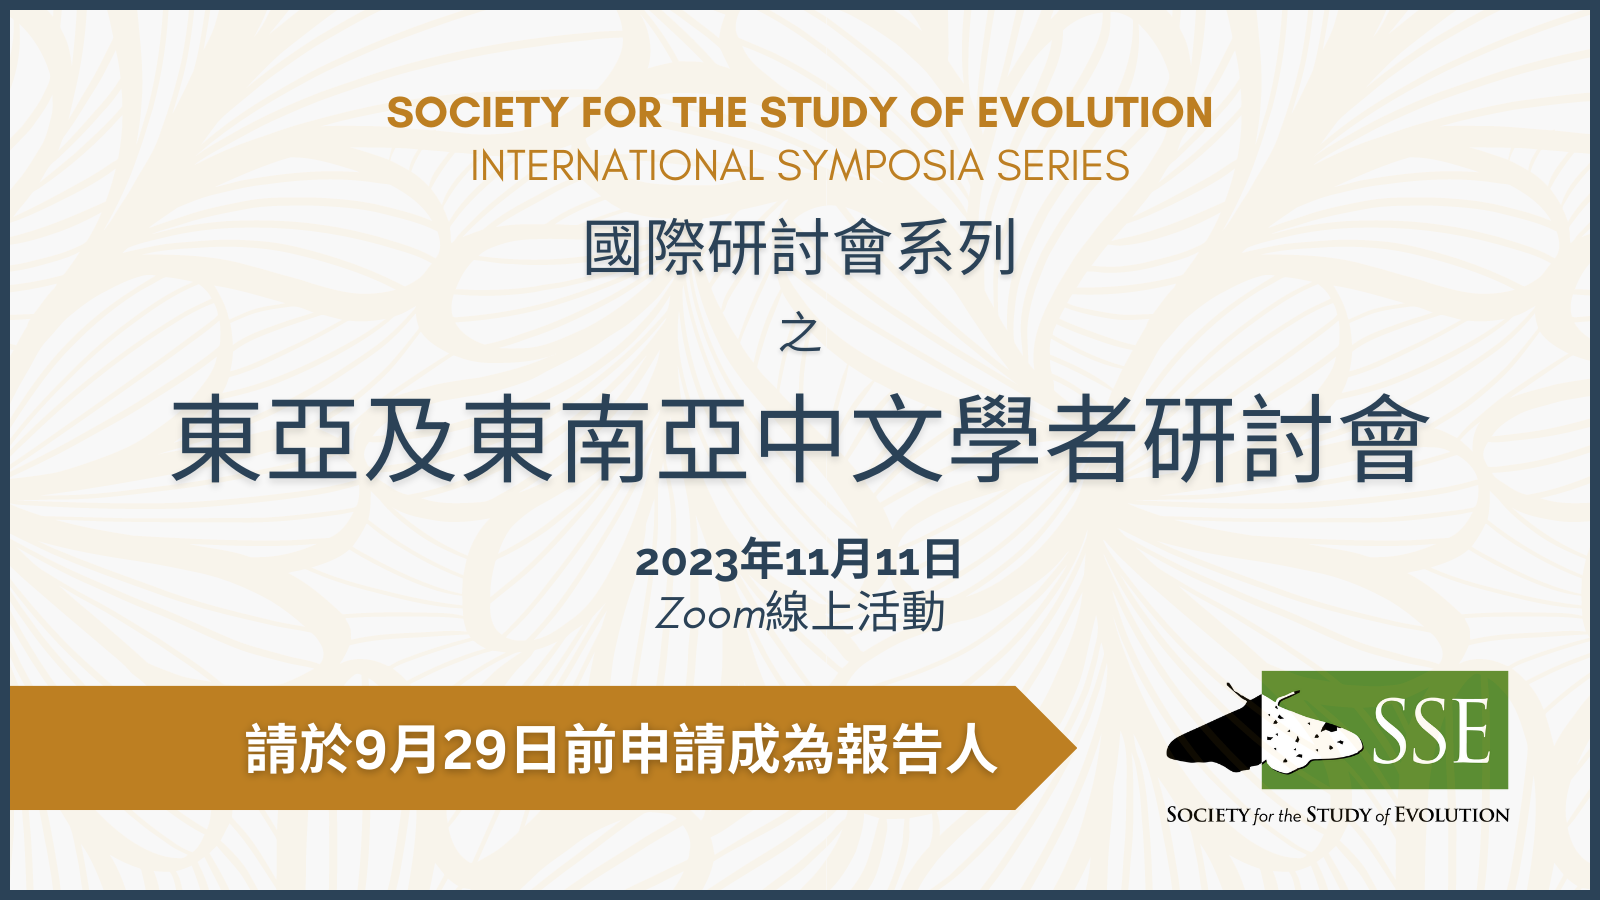 SOCIETY FOR THE STUDY OF EVOLUTION (演化研究學會)
International Symposium (國際研討會系列)
之
東亞及東南亞中文學者研討會
2023年11月11日
Zoom線上活動
請於9月29日前申請成為報告人